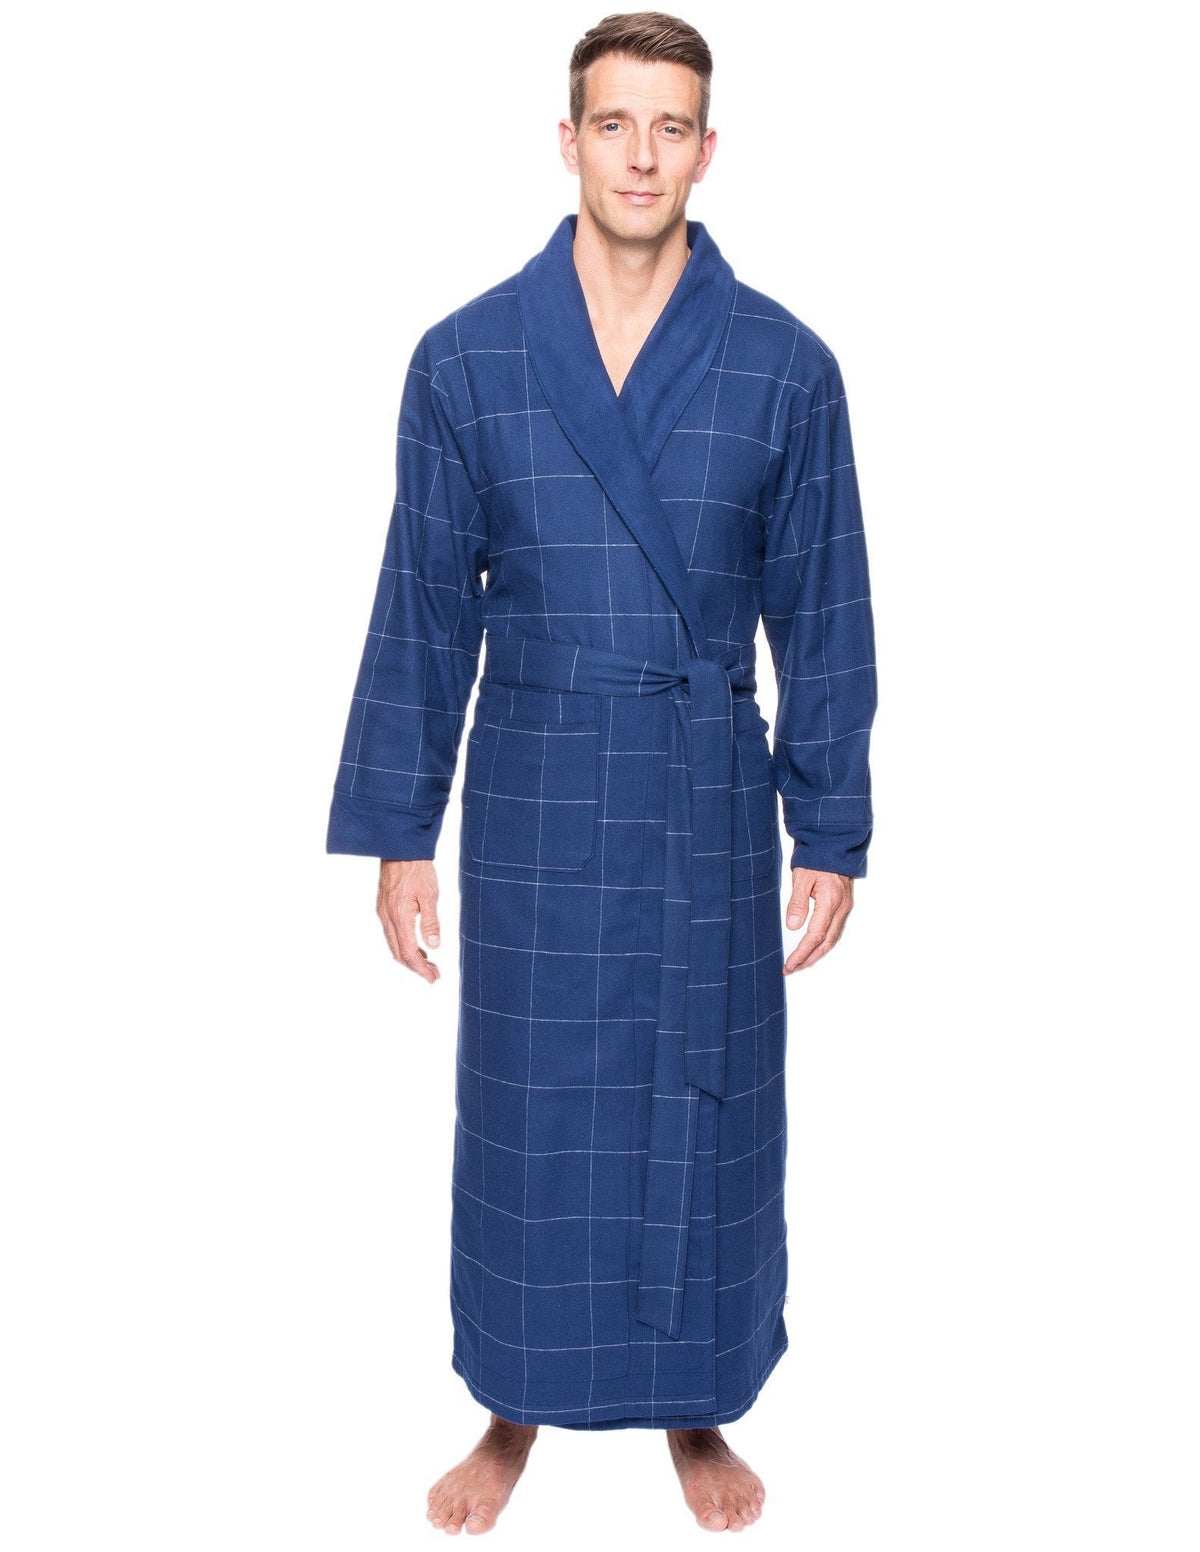 Men's Premium 100% Cotton Flannel Fleece Lined Robe - Windowpane Checks Dark Blue